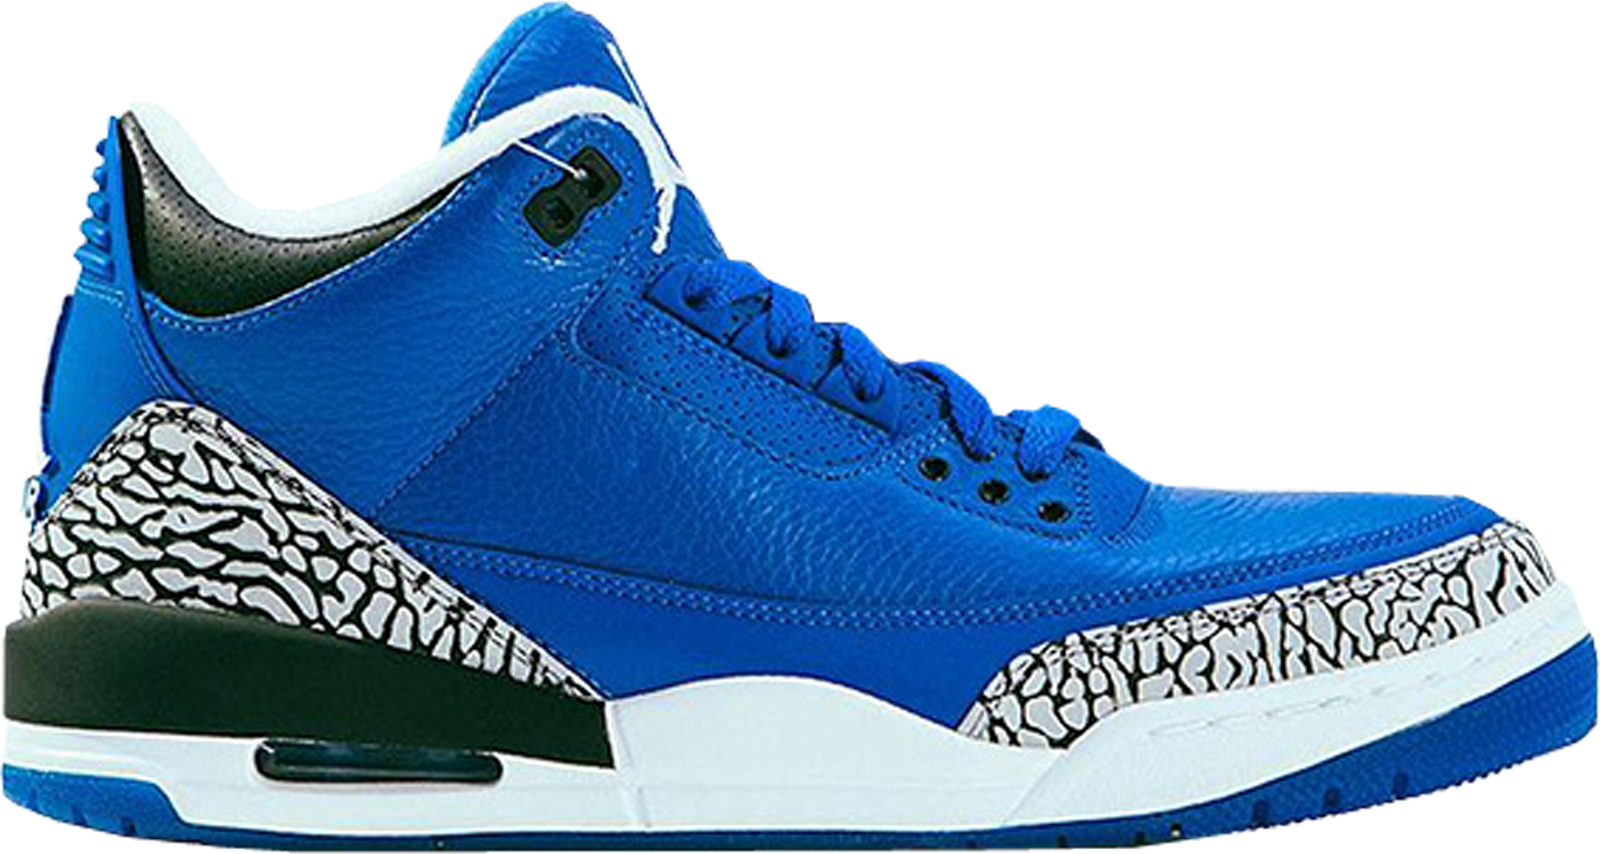 Jordan 3 Retro DJ Khaled Another One sneakers